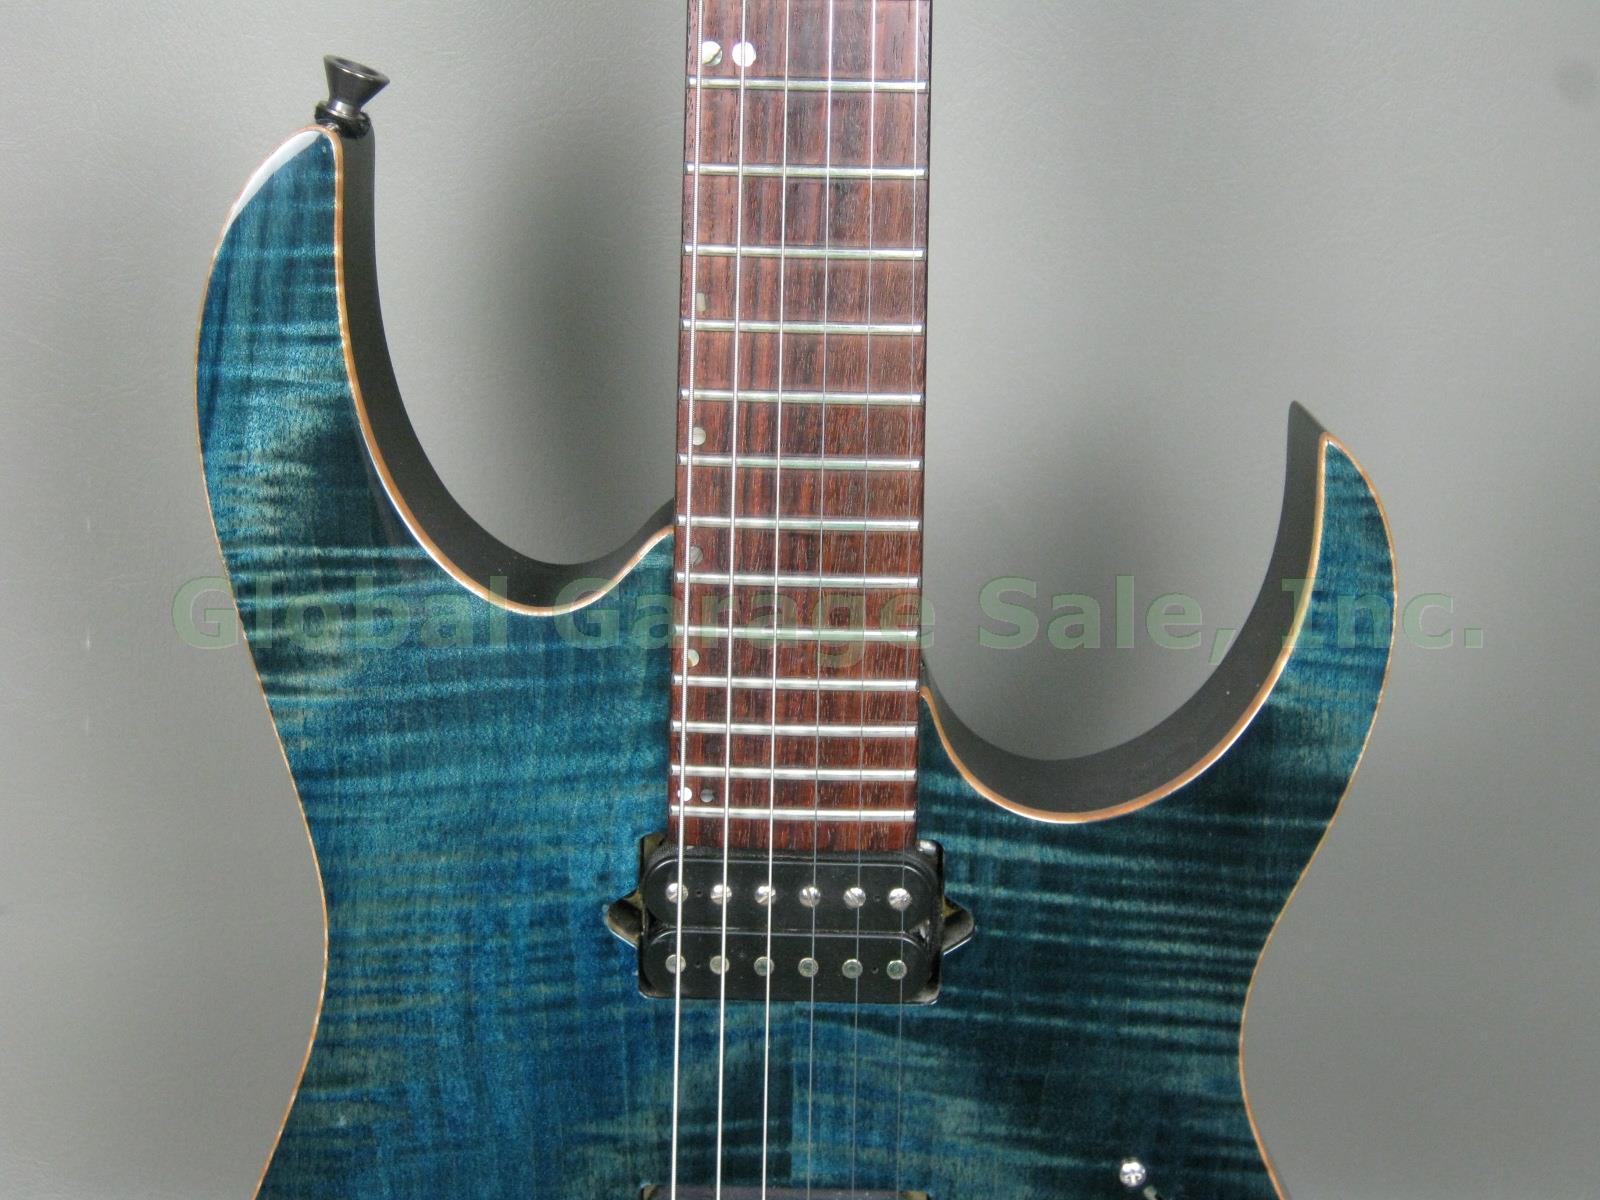 1999 Ibanez Prestige RG3120 Electric Guitar Blue Flame Maple Floyd Rose Tremolo 3